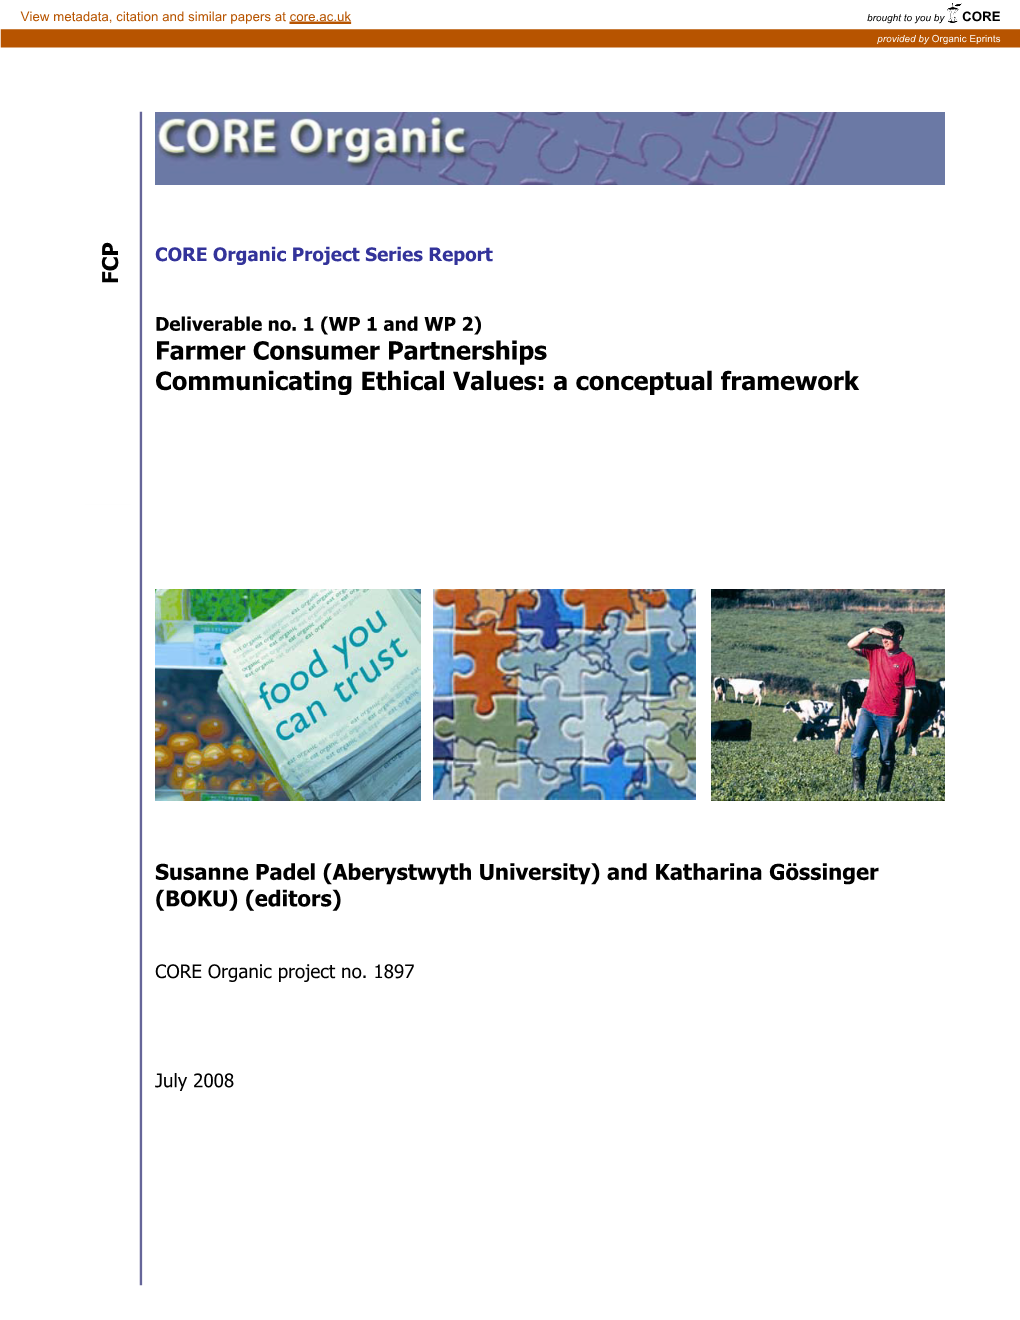 Farmer Consumer Partnerships Communicating Ethical Values: a Conceptual Framework